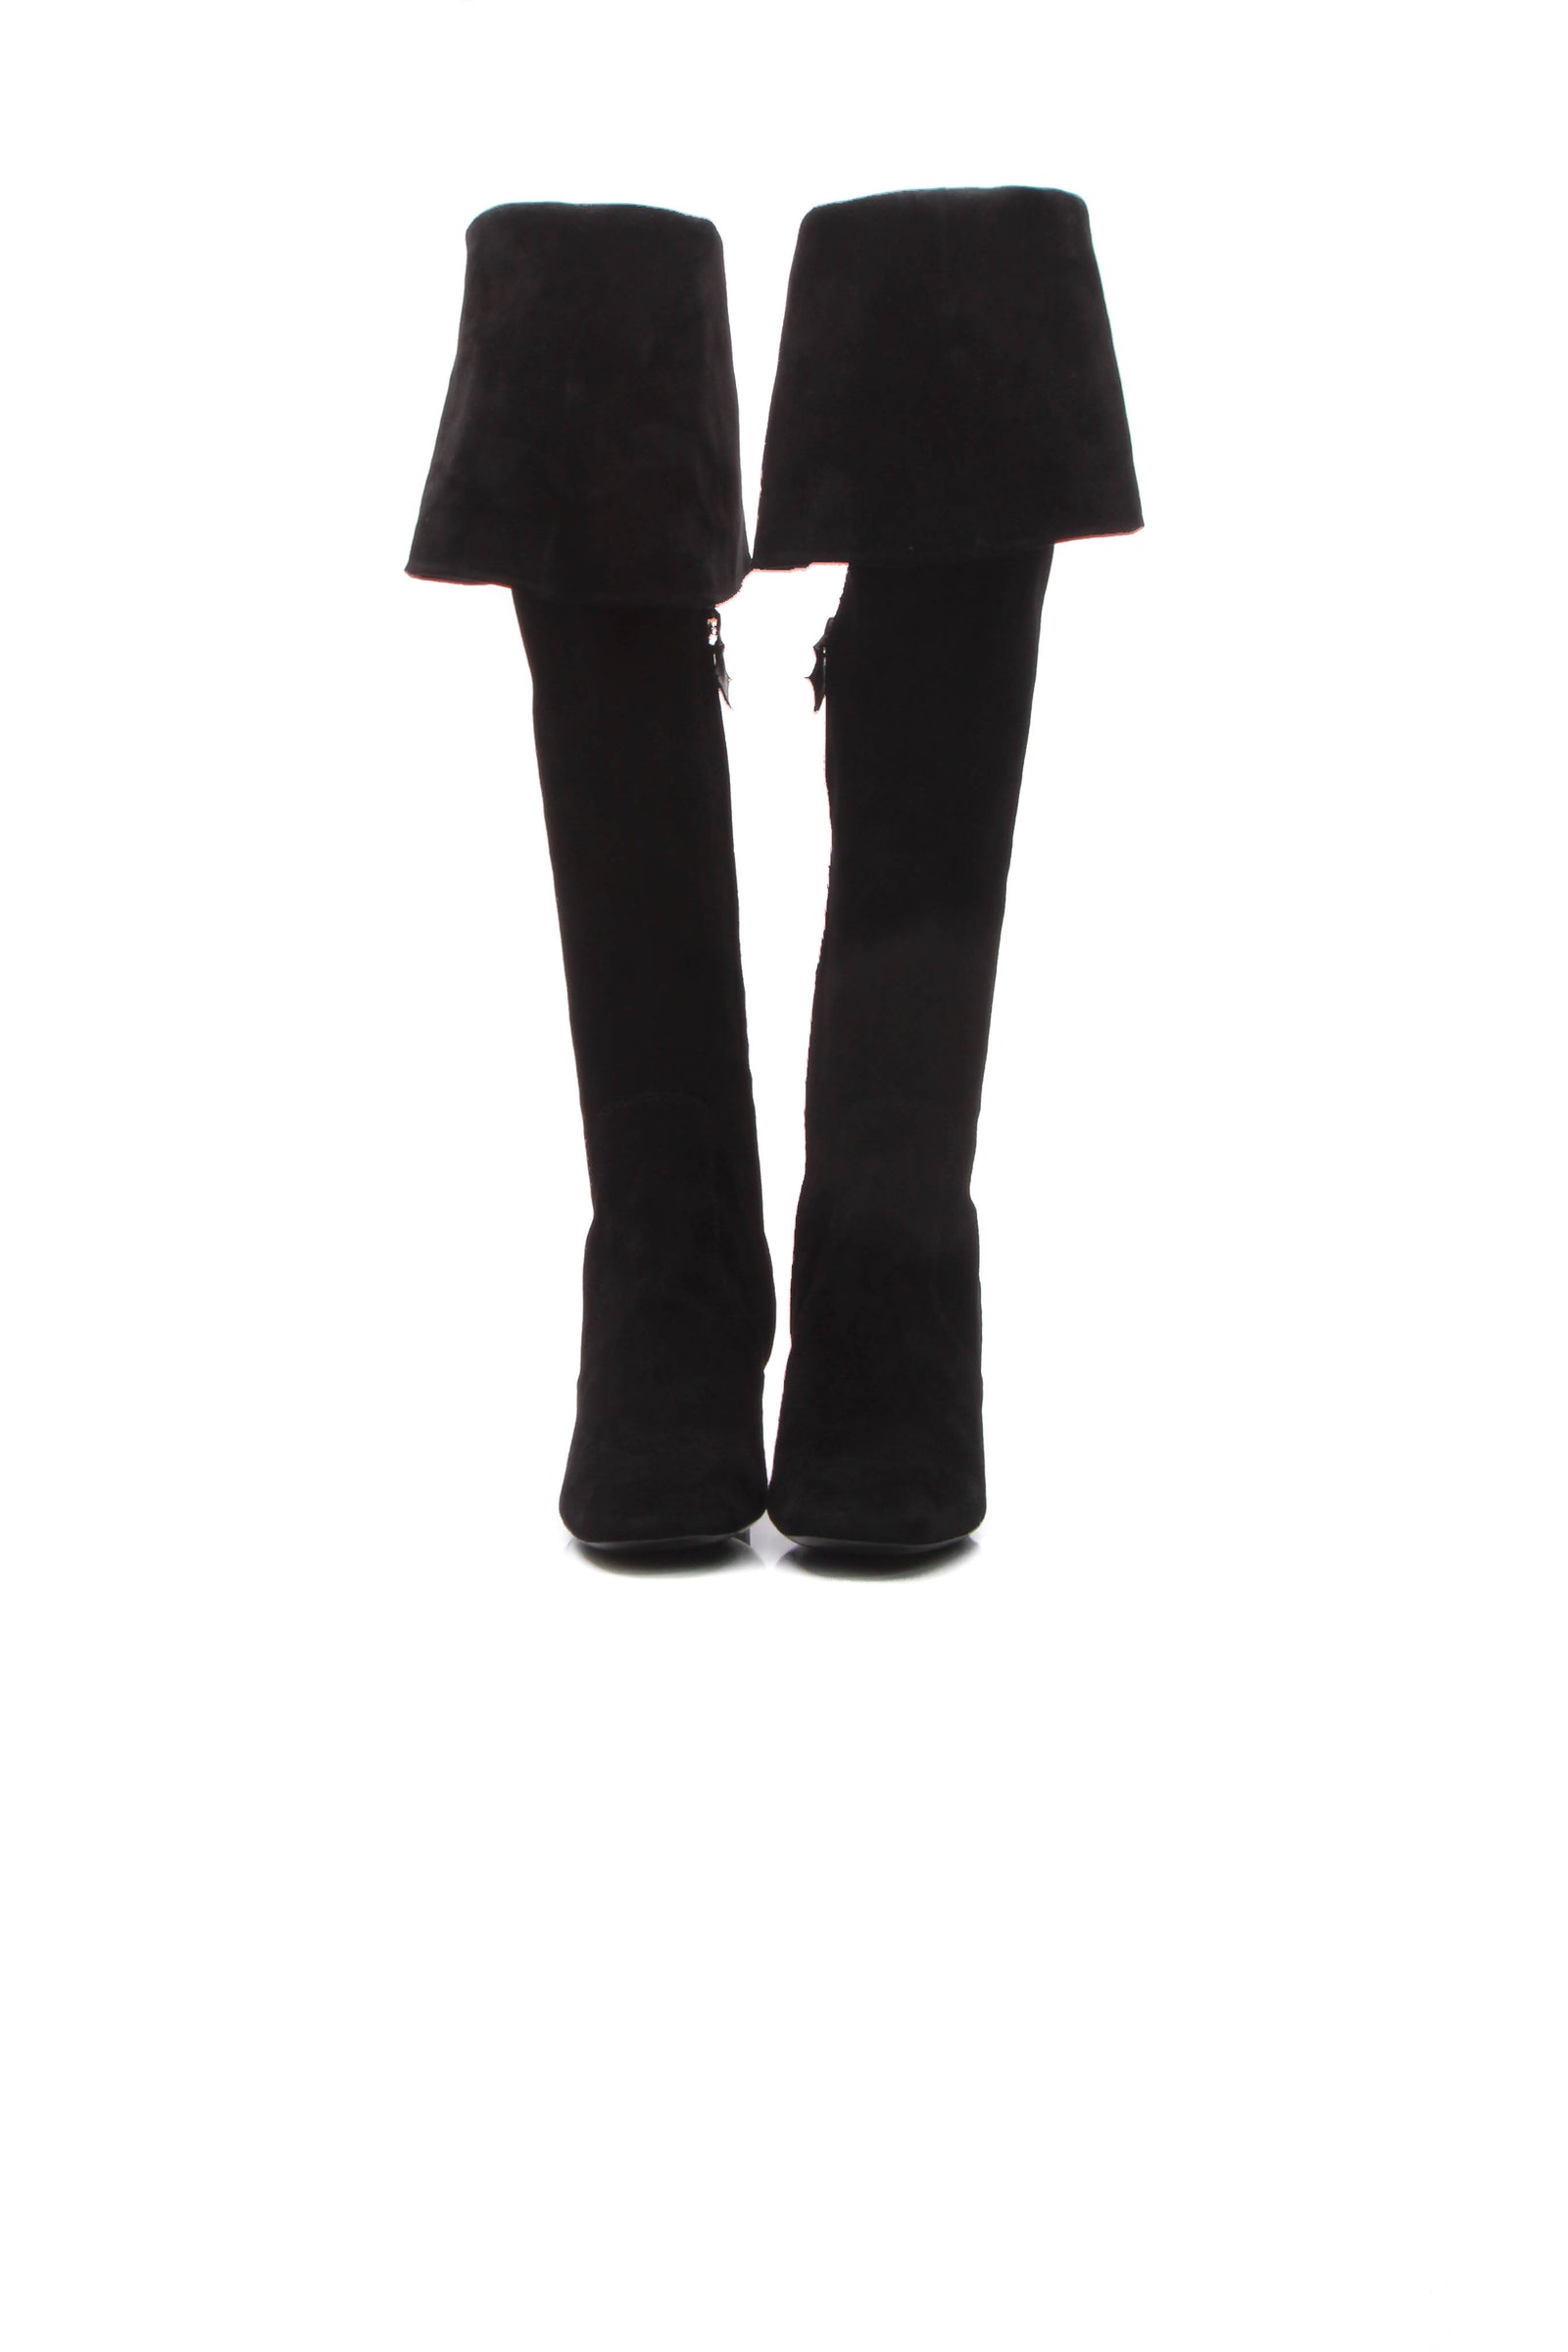 Louis Vuitton Skyline Thigh Boot in Black